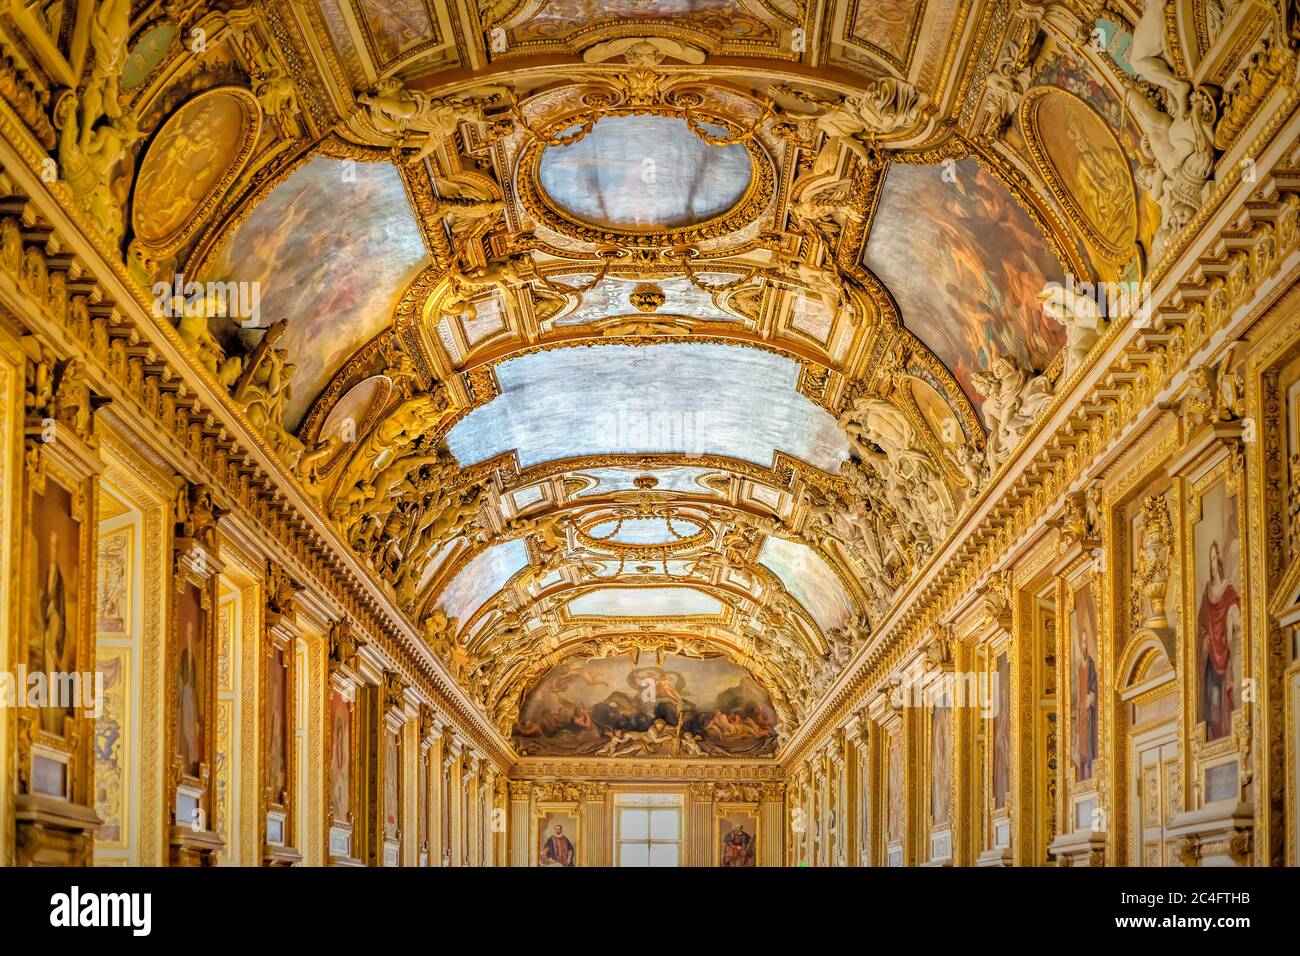 Galerie d'Apollon (Apollo Gallery) in the Louvre Museum Paris France Stock Photo